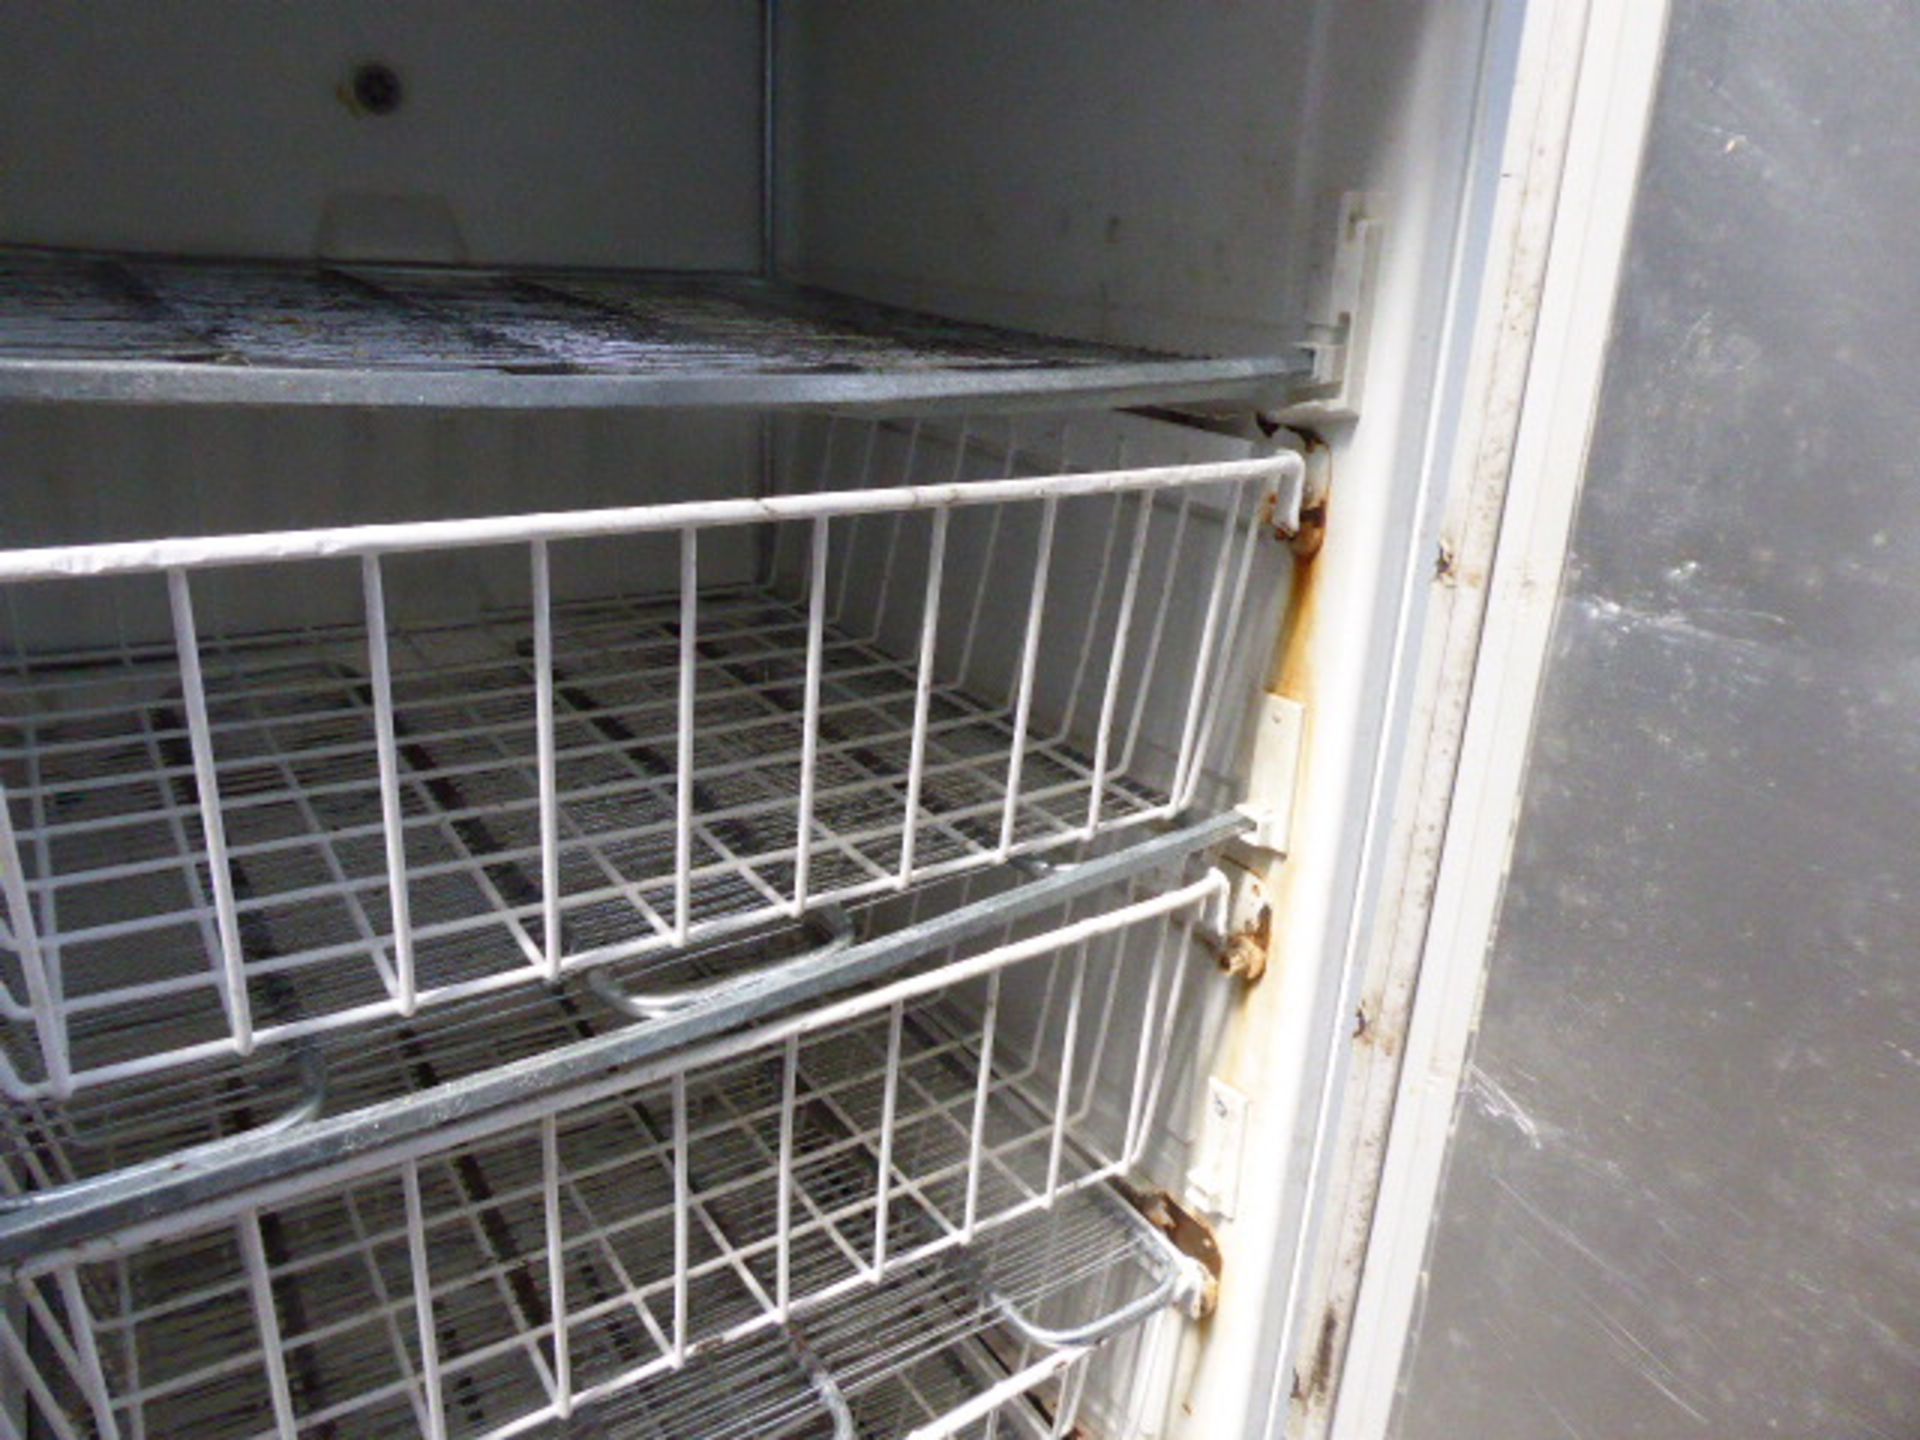 60cm Gram single door freezer (Failed electrical test) - Image 2 of 3